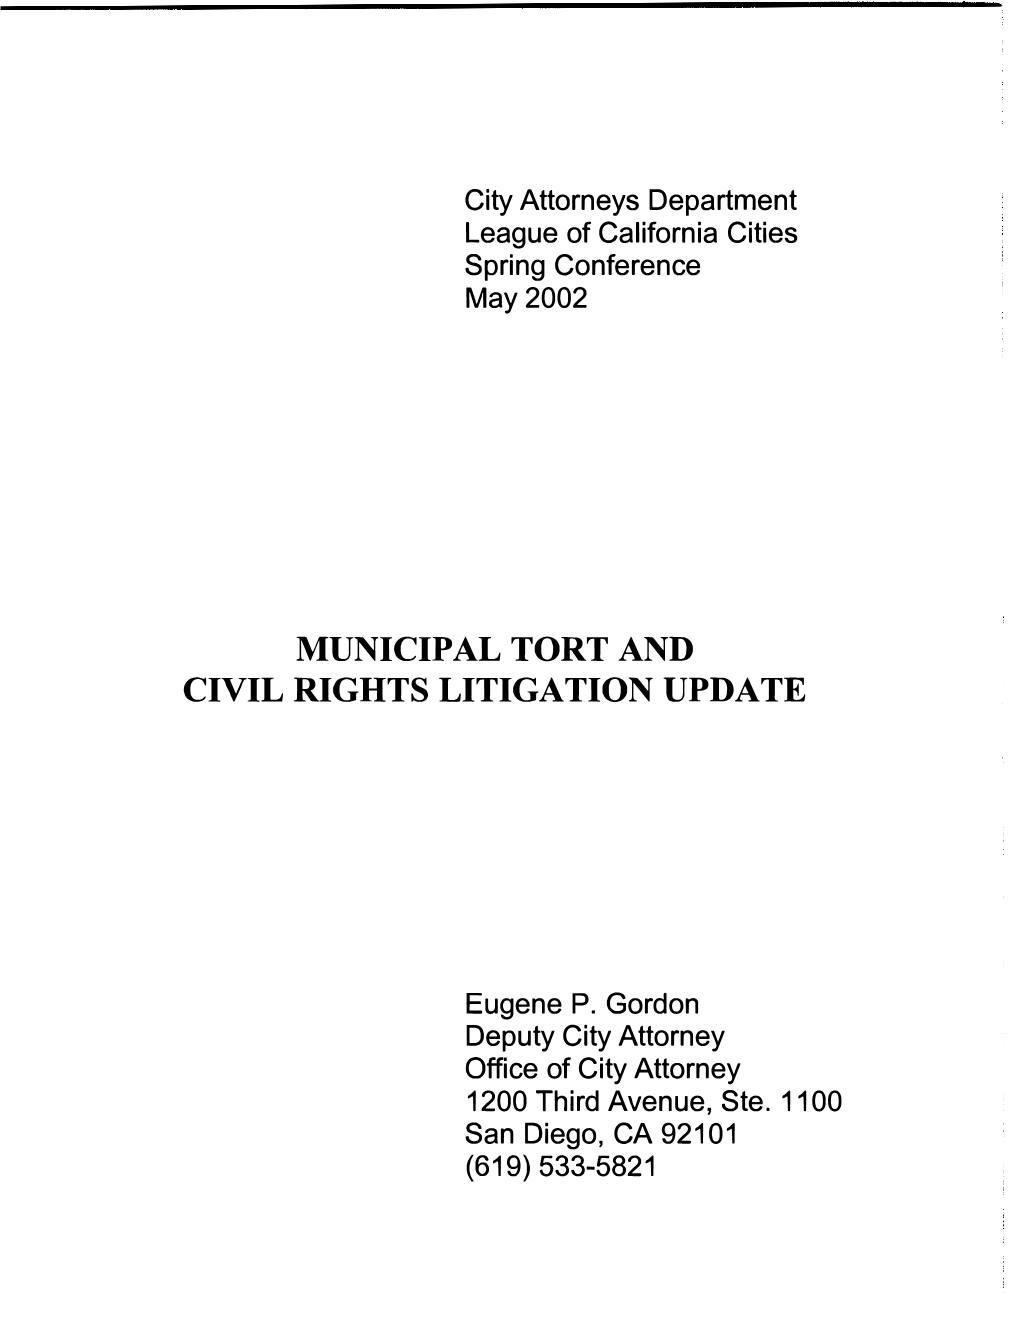 Municipal Tort and Civil Rights Litigation Update